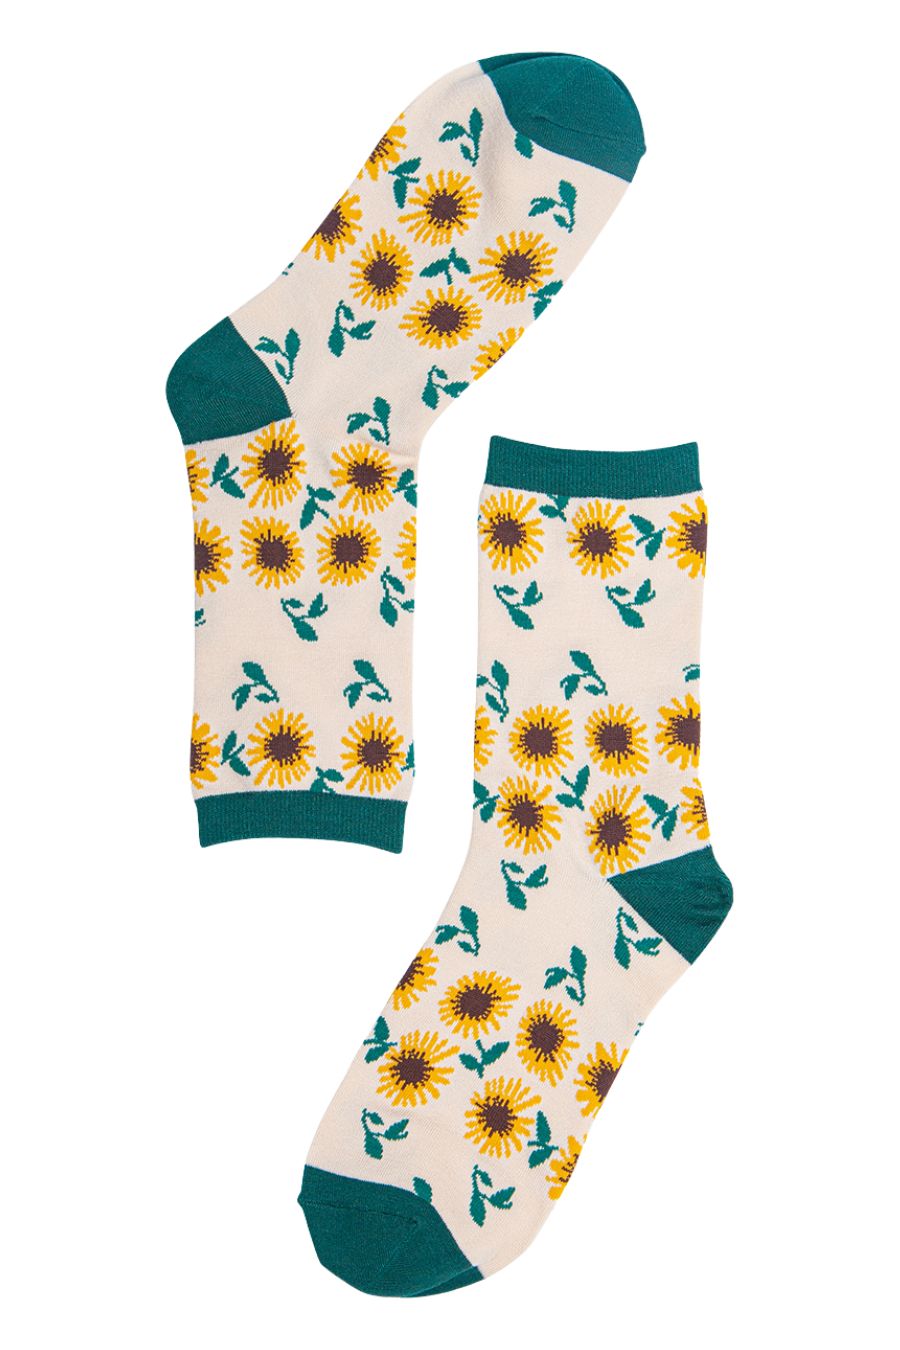 cream, green bamboo socks with a yellow sunflower print